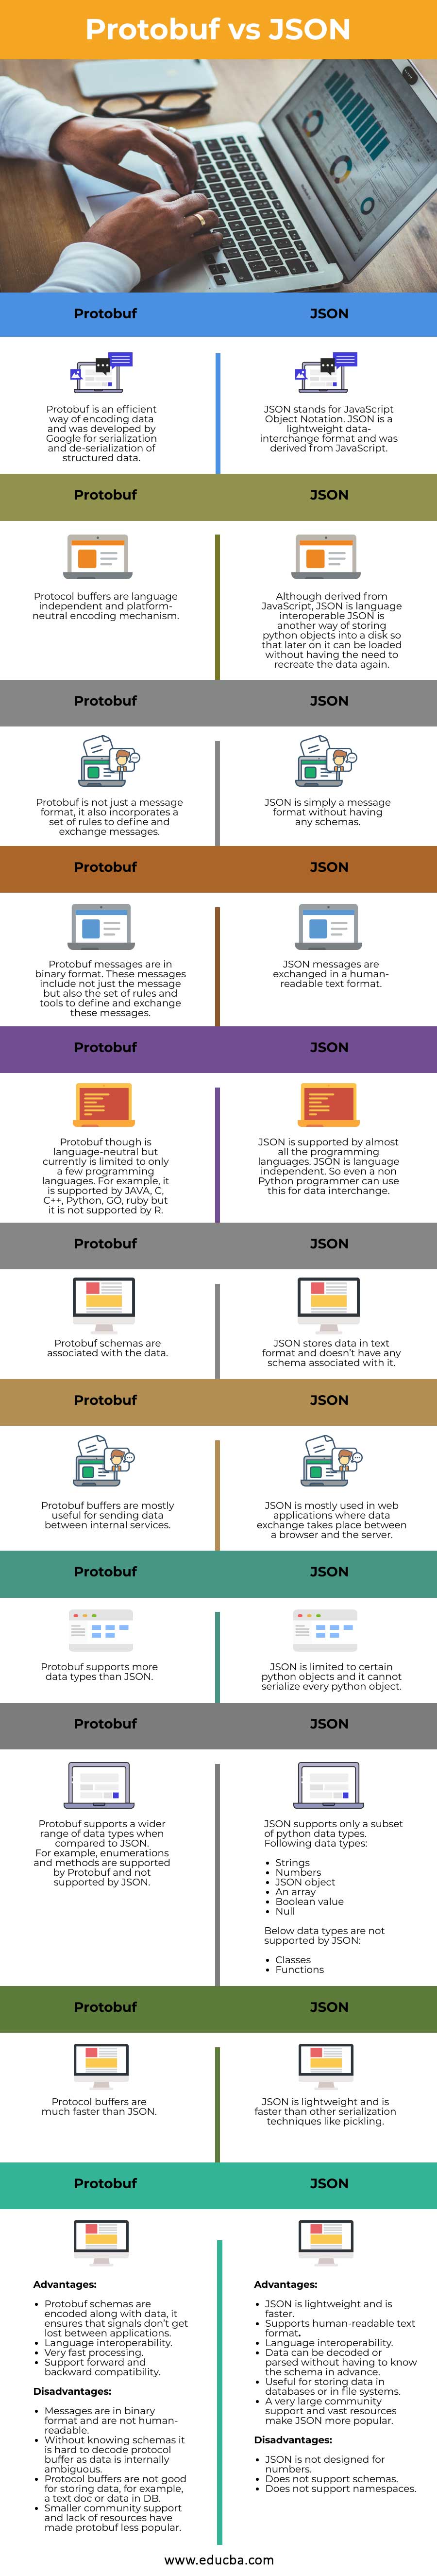 Protobuf-vs-JSON-info